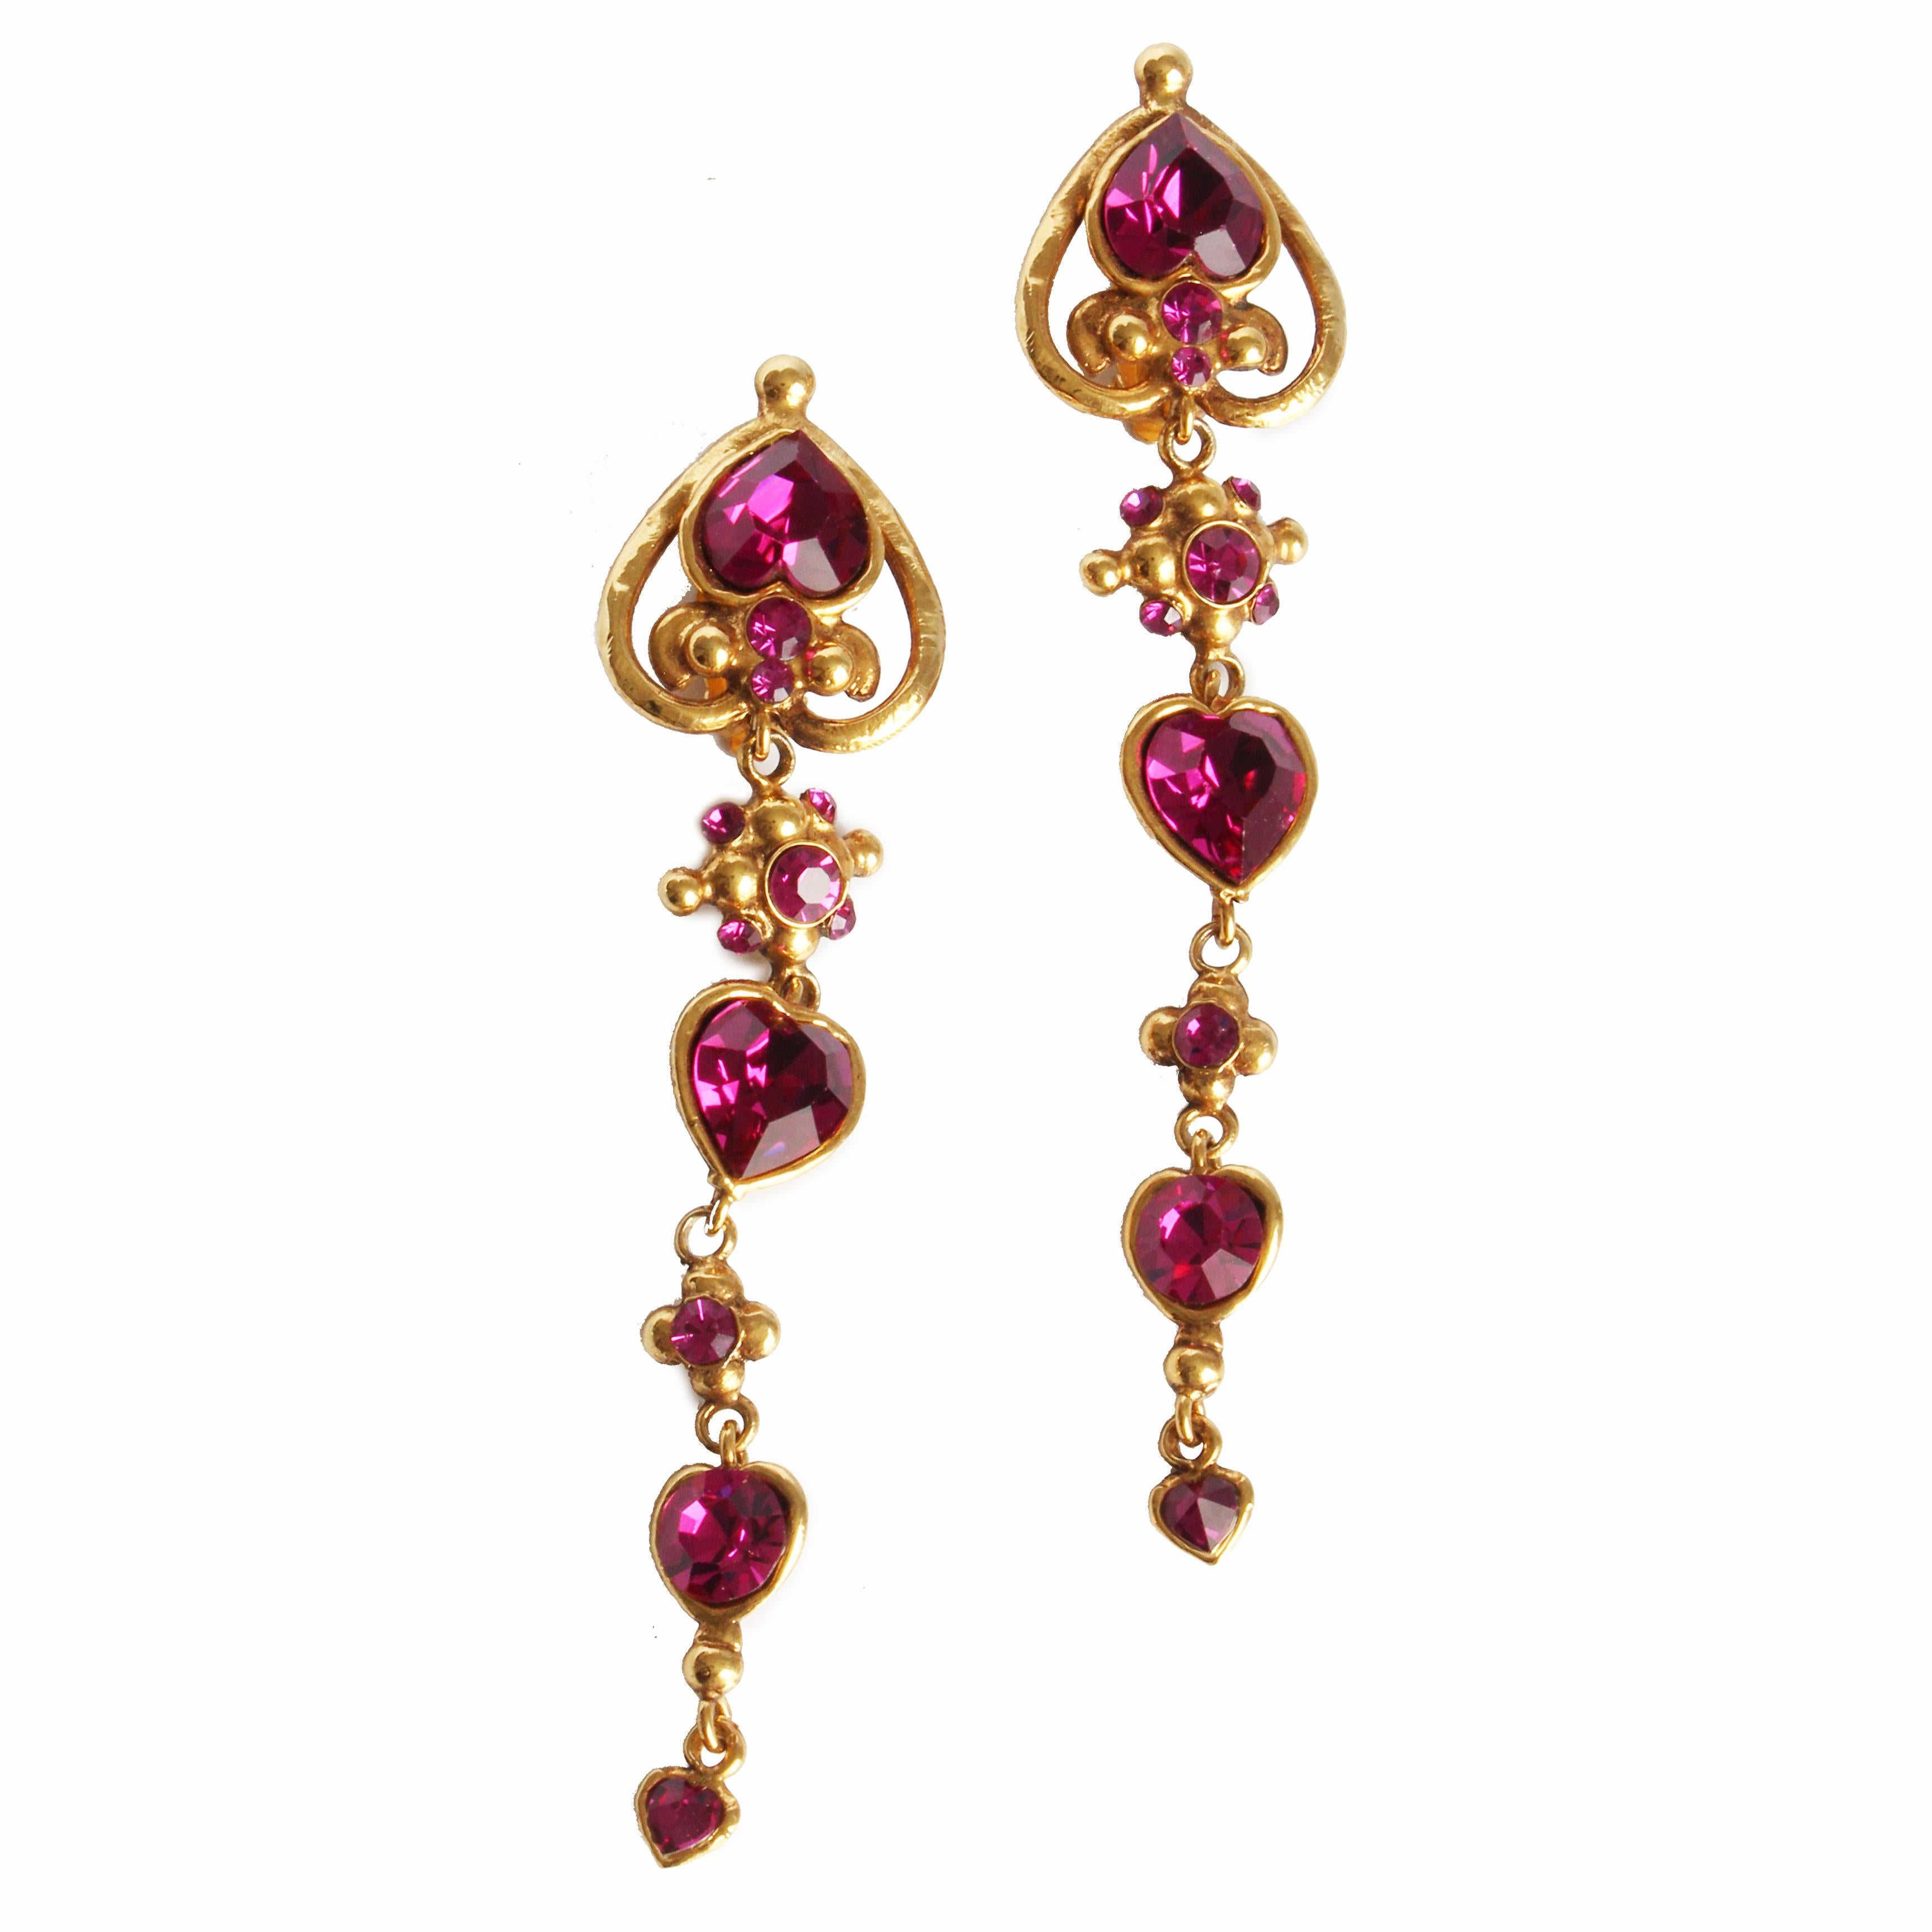 Baroque Revival Emanuel Ungaro Earrings Long Dangle Pink Crystals Baroque Oversized 5in Vintage For Sale